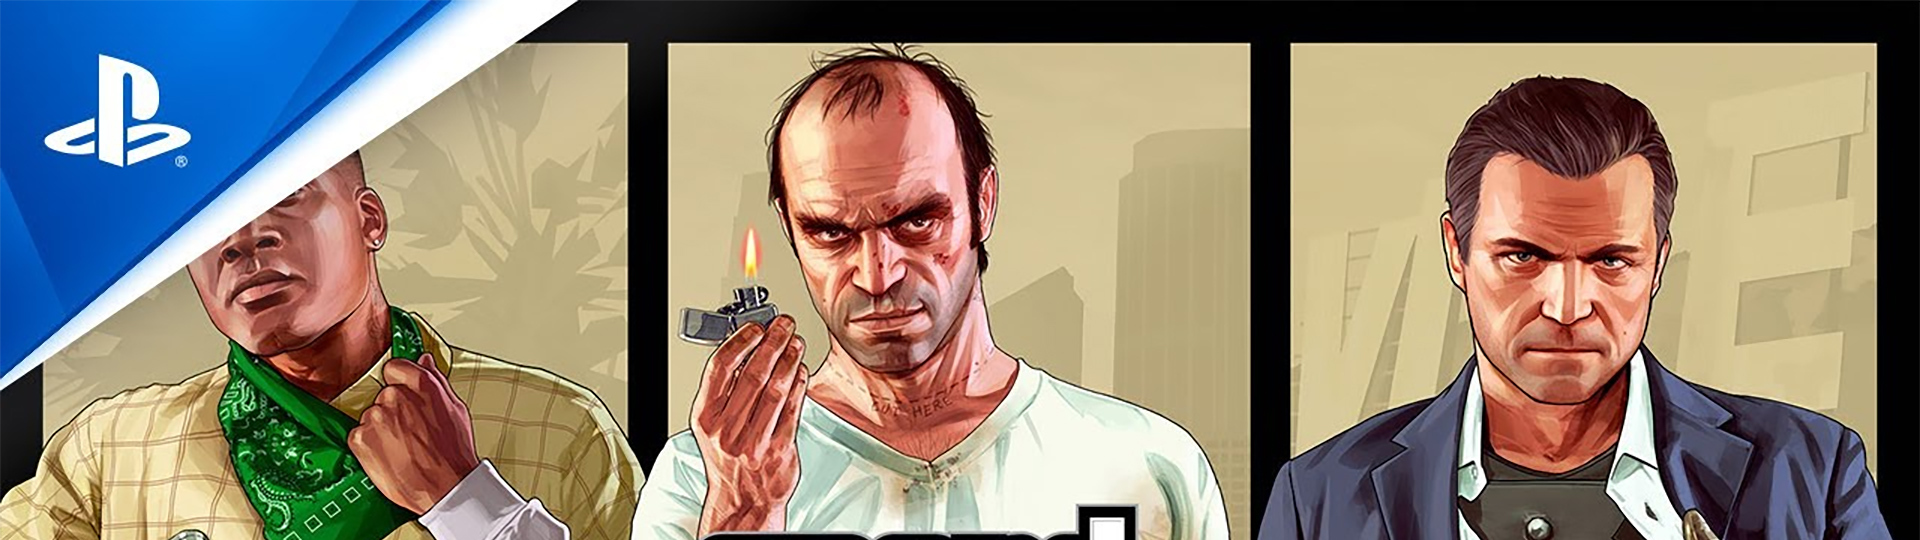 Grand Theft Auto 5 dorazí na PS5 v roce 2021 | Novinky